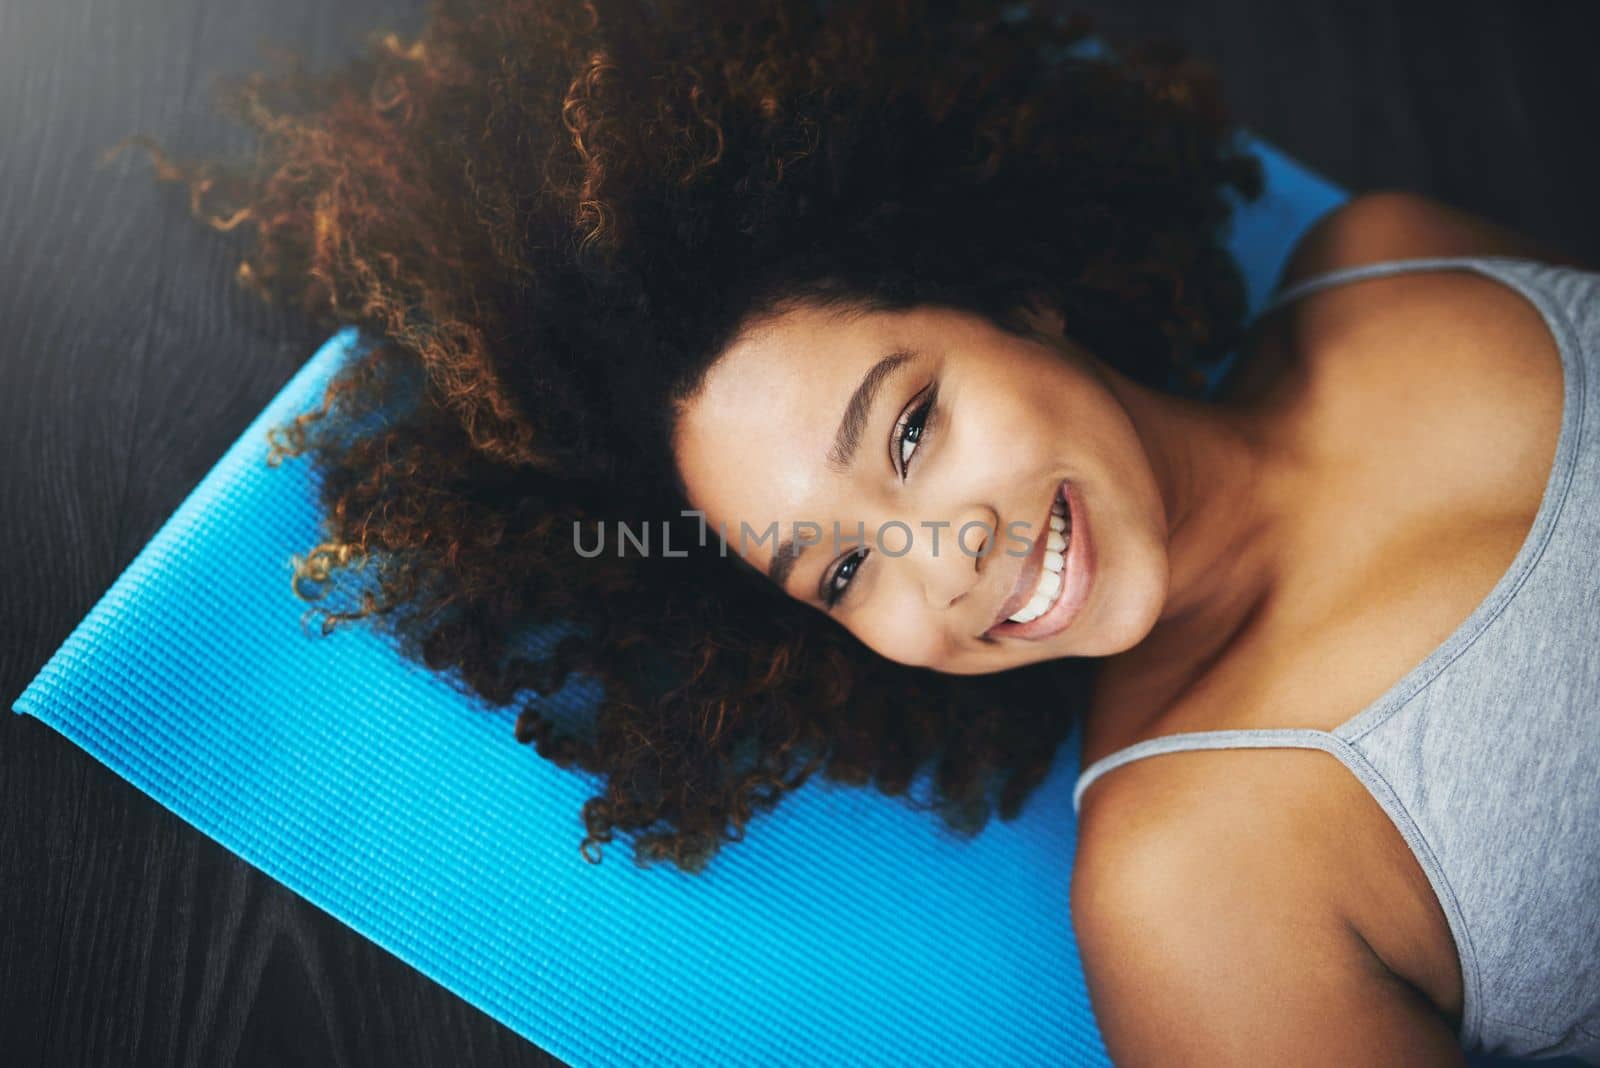 Yoga has a way of making you abundantly happy. High angle shot of a young woman practising yoga